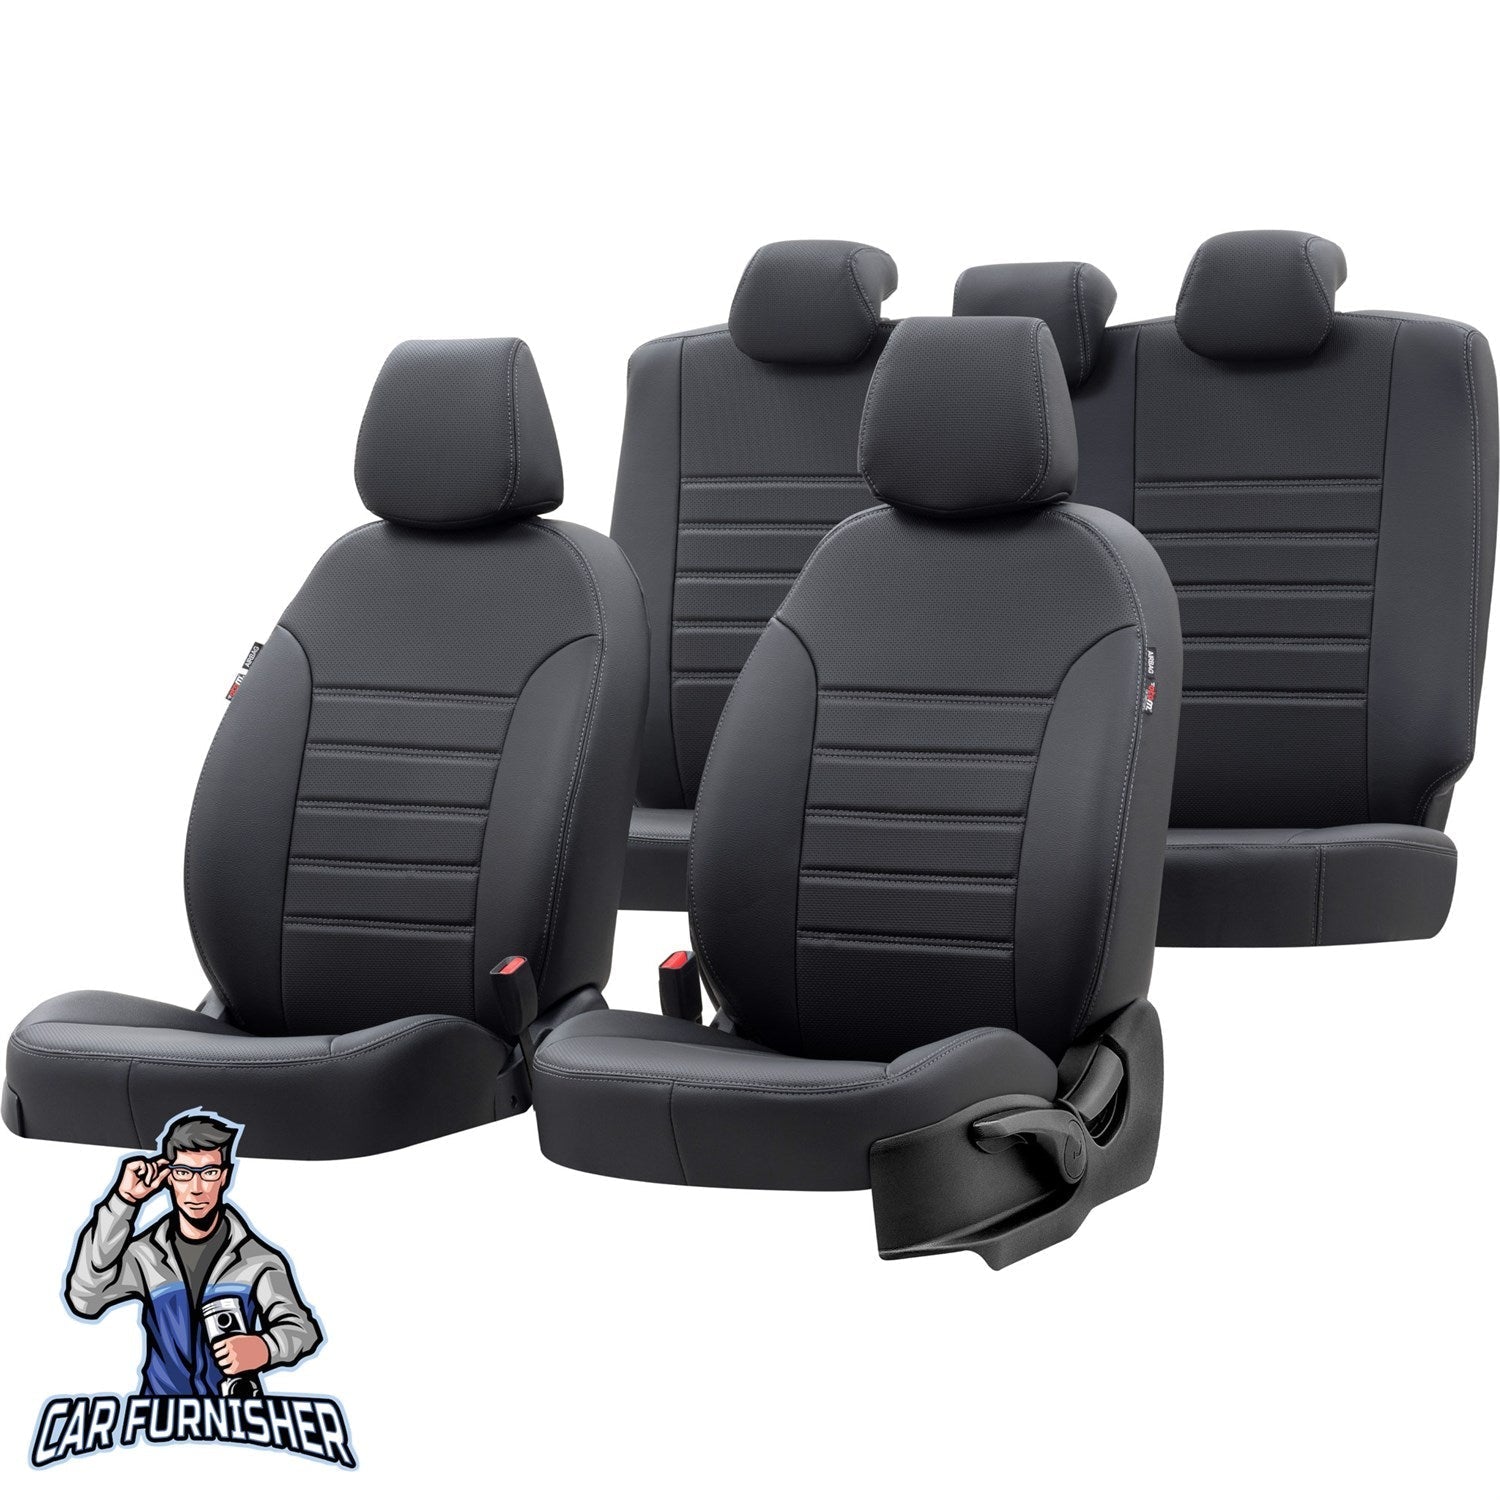 Chevrolet Captiva Car Seat Cover 2006-2011 LS/LT/LTX-Z New York Black Leather & Fabric